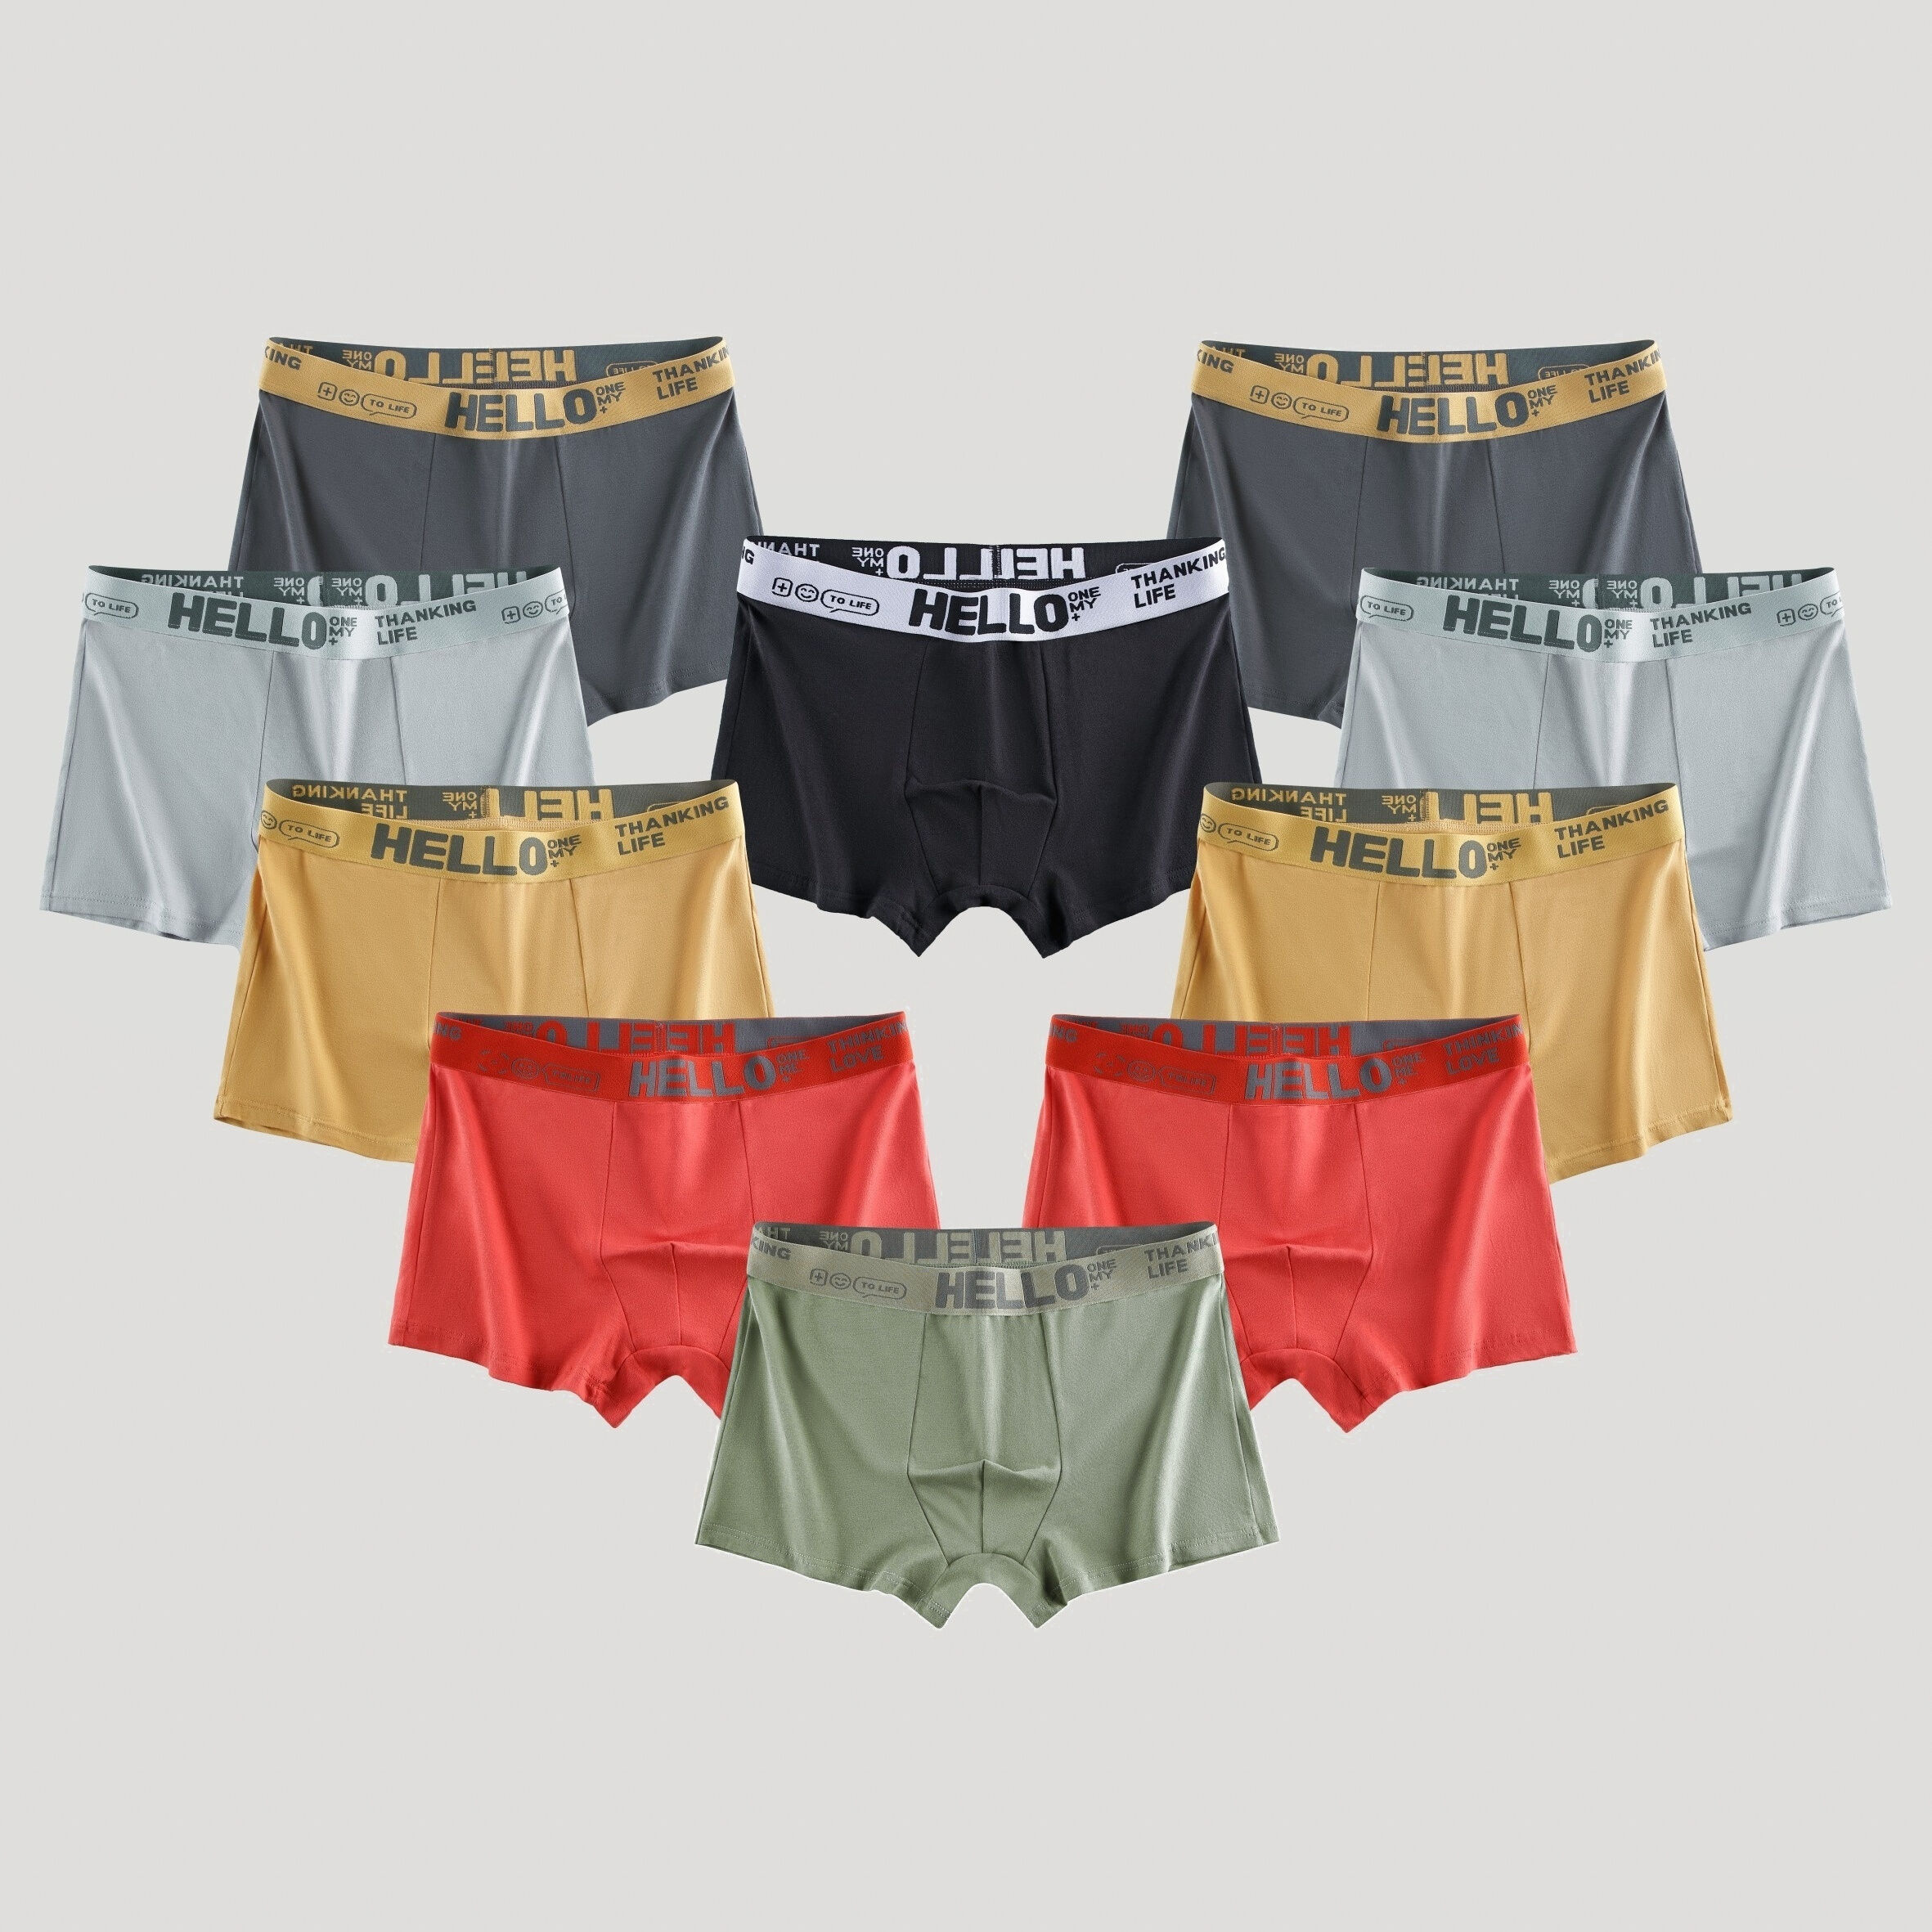 Temu 10pcs 'hello' Print Men's Cotton Boxers Briefs Underwear, Breathable Comfy Quick Drying Stretchy Boxers Trunks Multicolor XL(36)